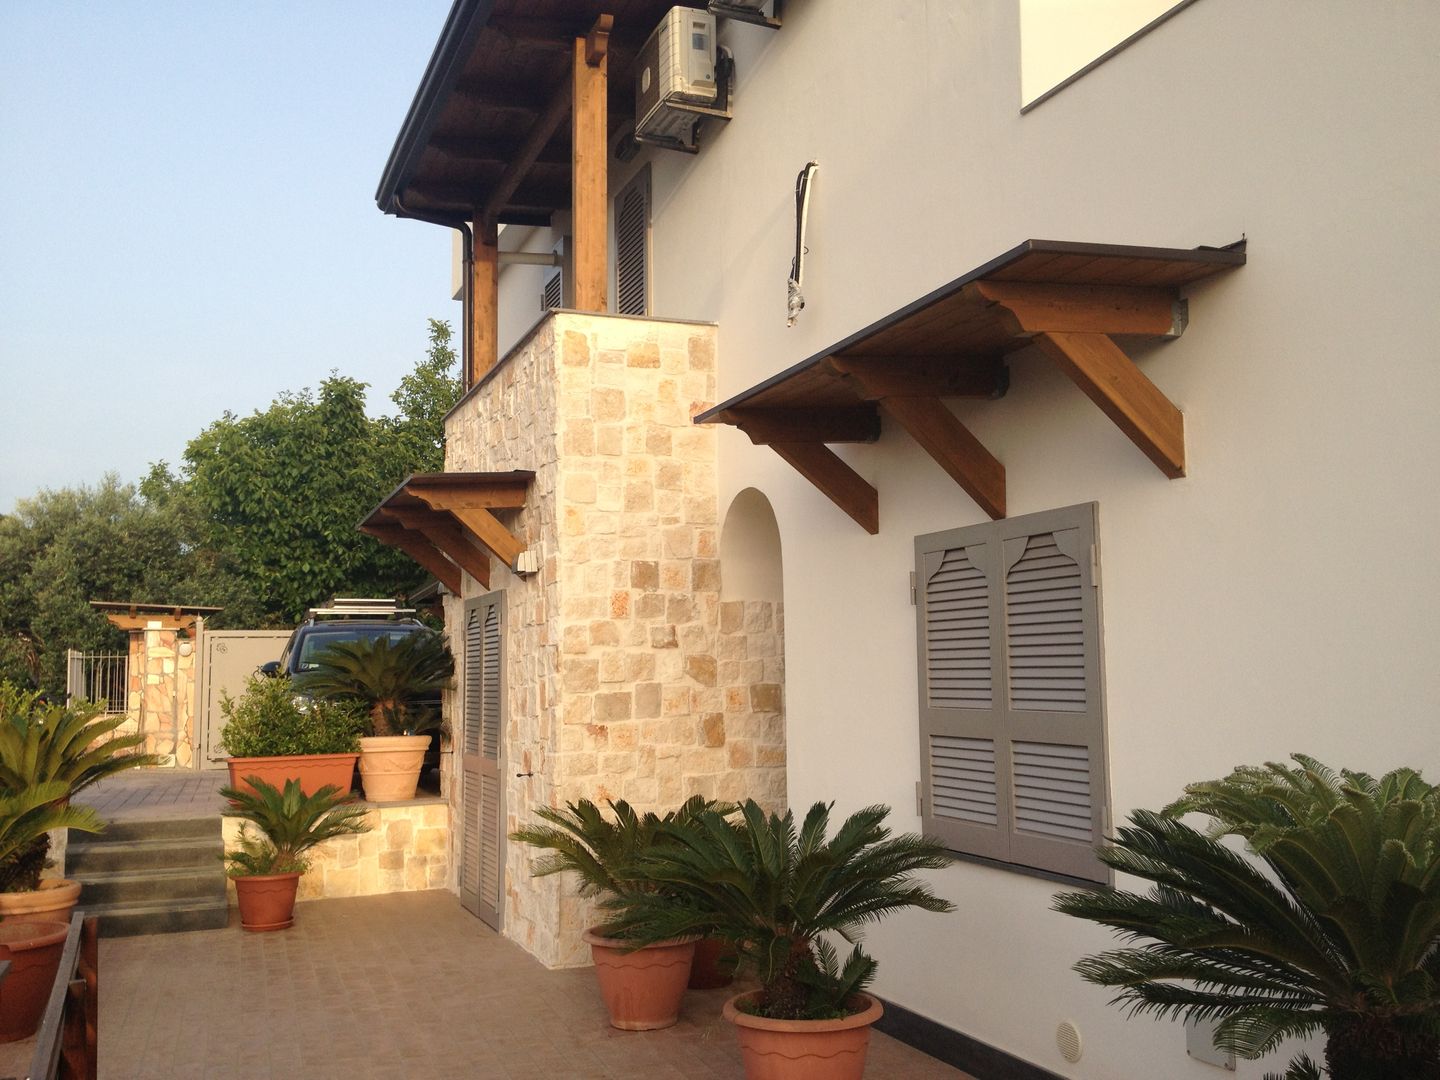 OPERA, Studio illiano&partners Studio illiano&partners Mediterranean style house